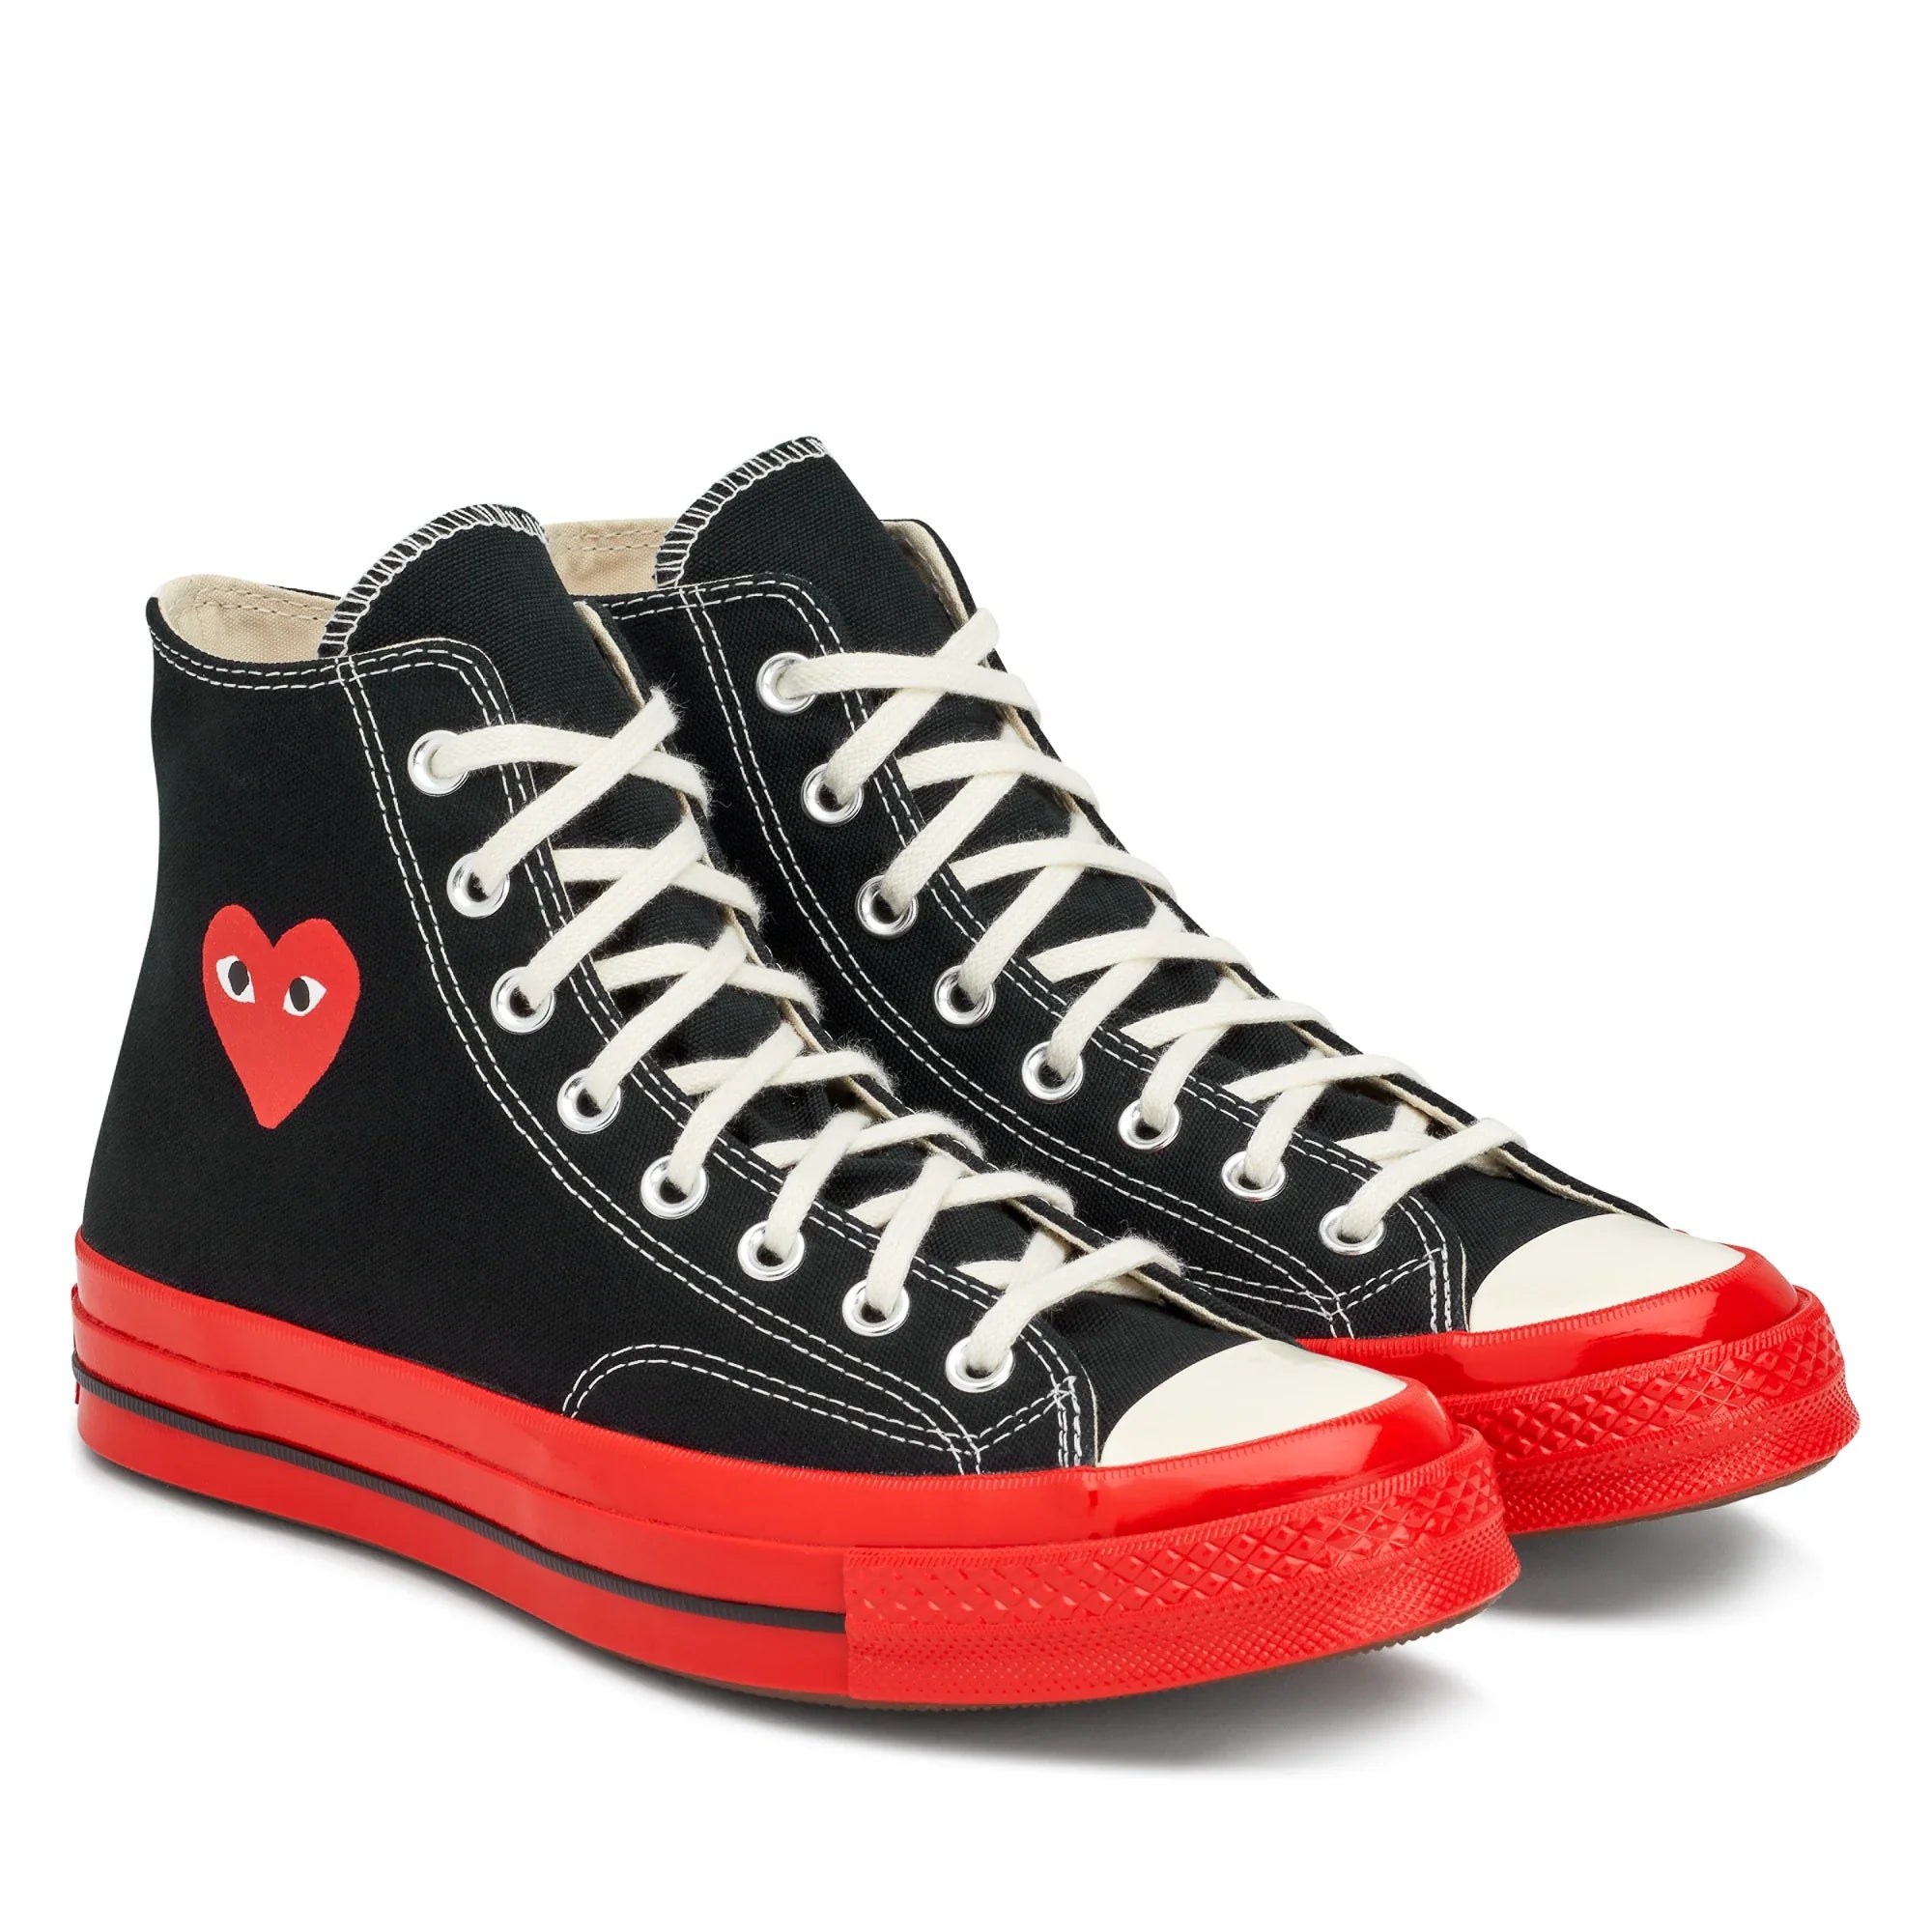 Converse Chuck Taylor All Star Hi Sneaker - Black Monochrome | Sneakers  black, Converse chuck taylor all star, Converse shoes